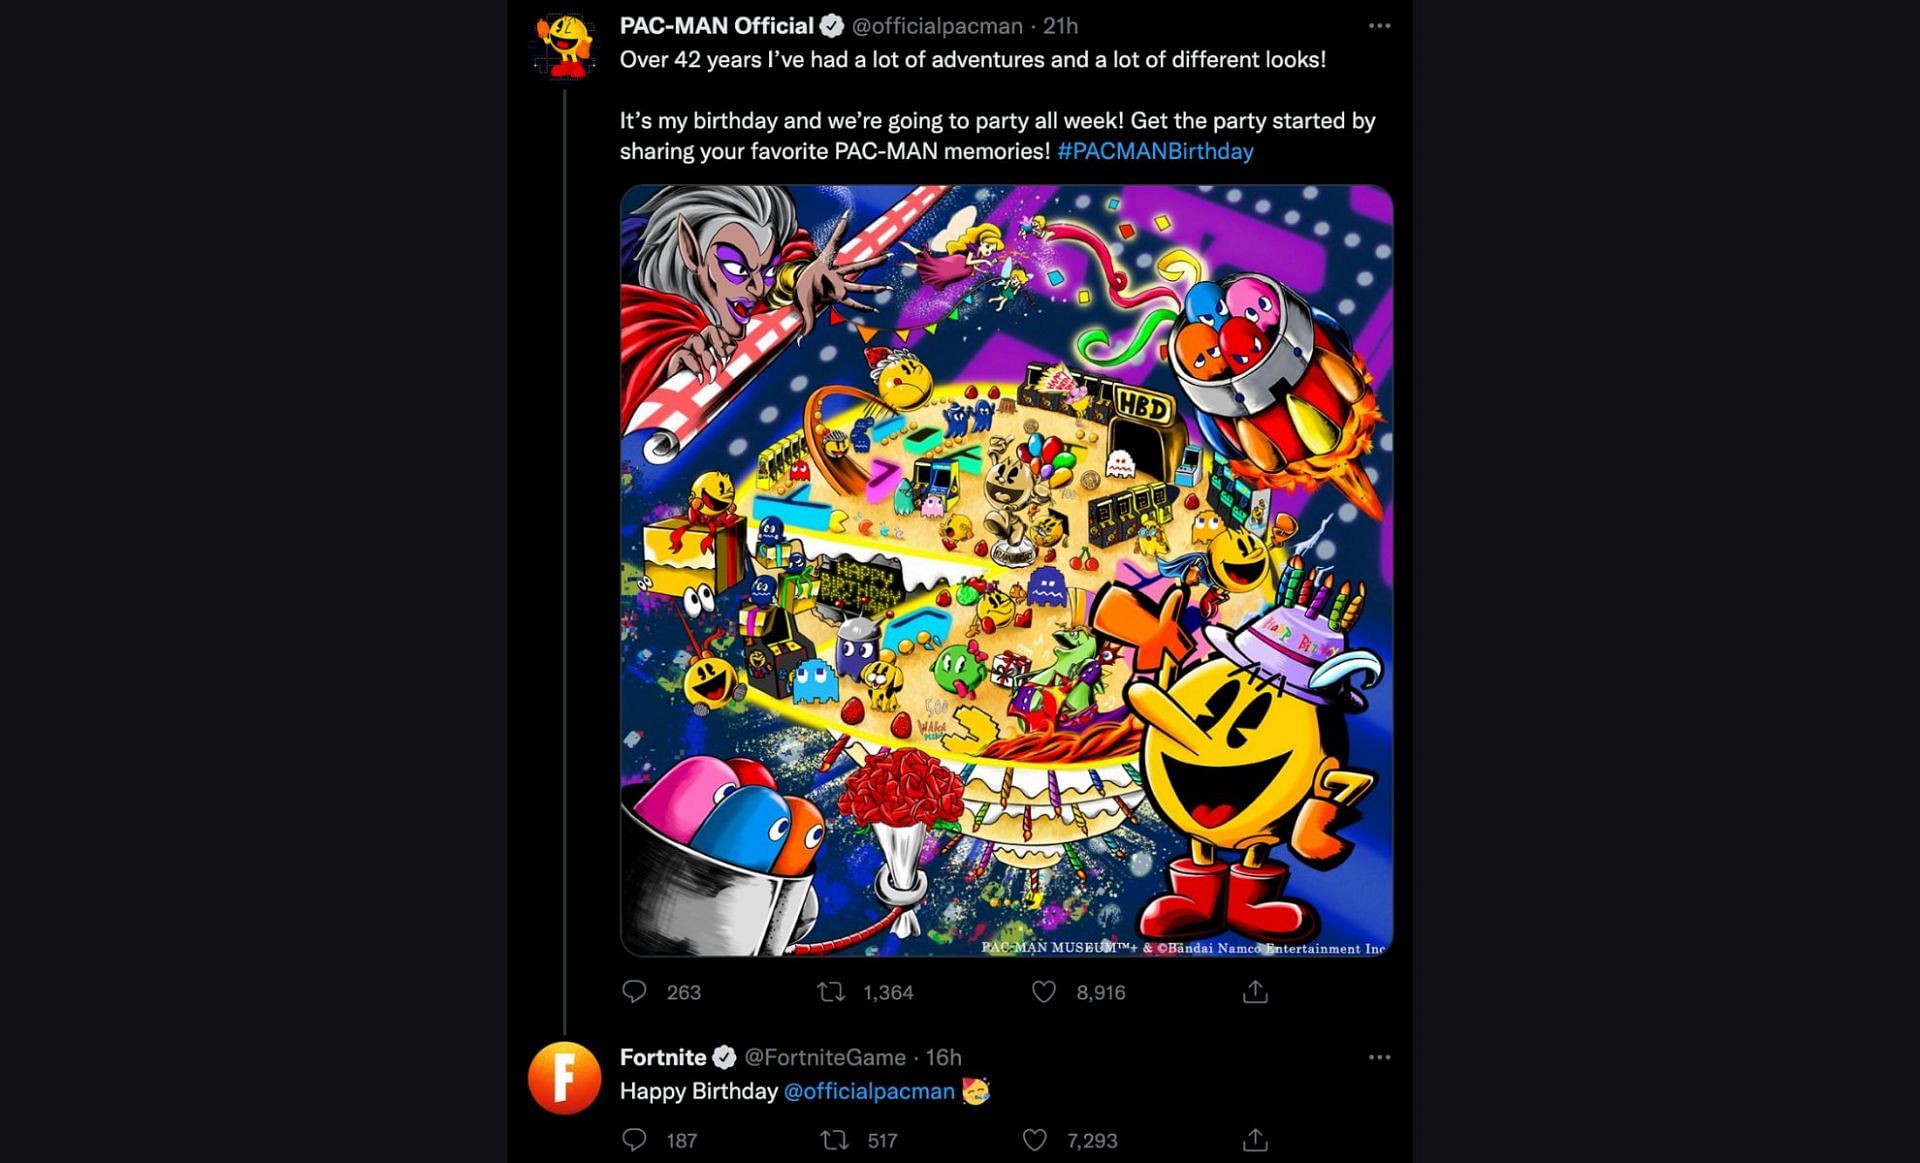 Fortnite wishing Pac-Man a happy birthday (Image via Twitter)